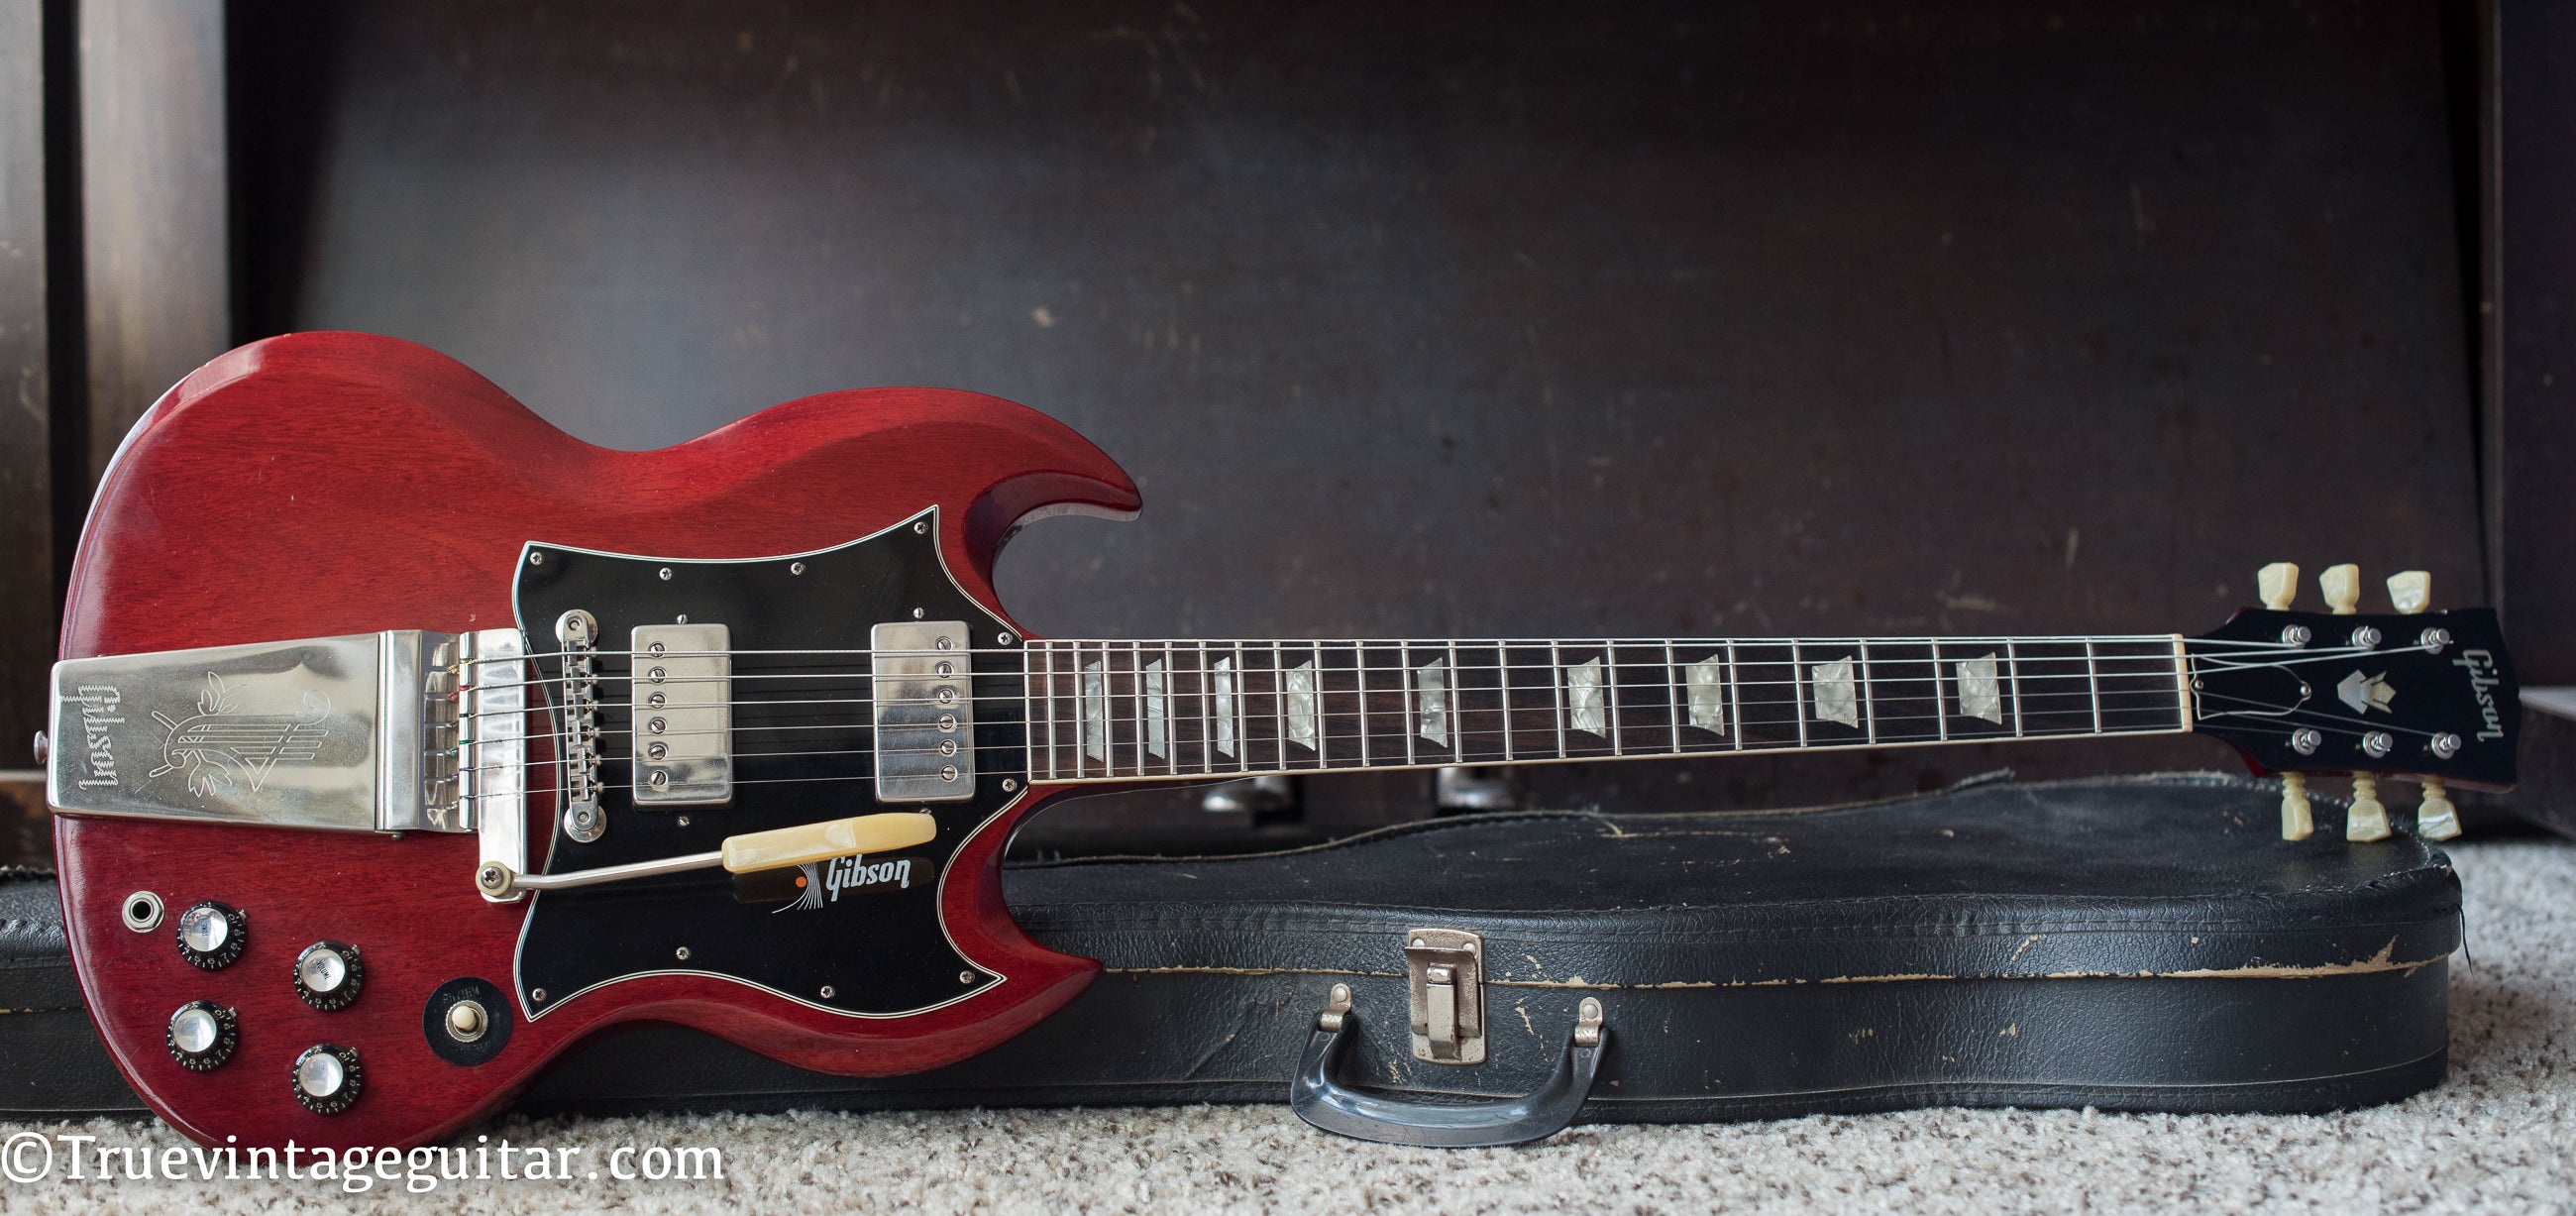 Vintage 1968 Gibson SG Standard guitar